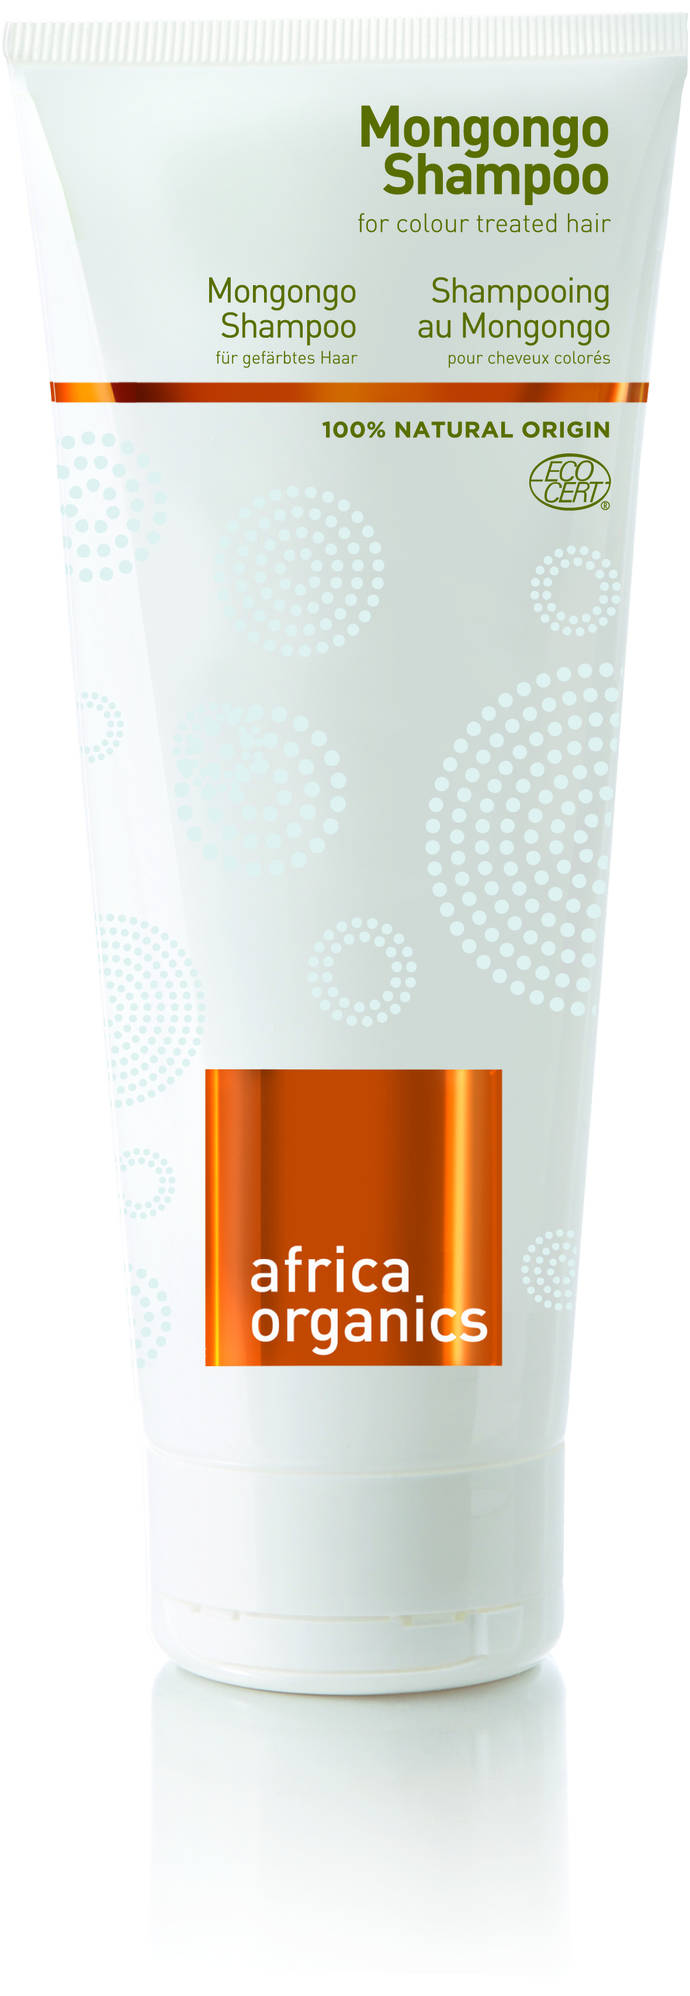 2. AFRICA ORGANICS Mongongo Shampoo ueber greenglam